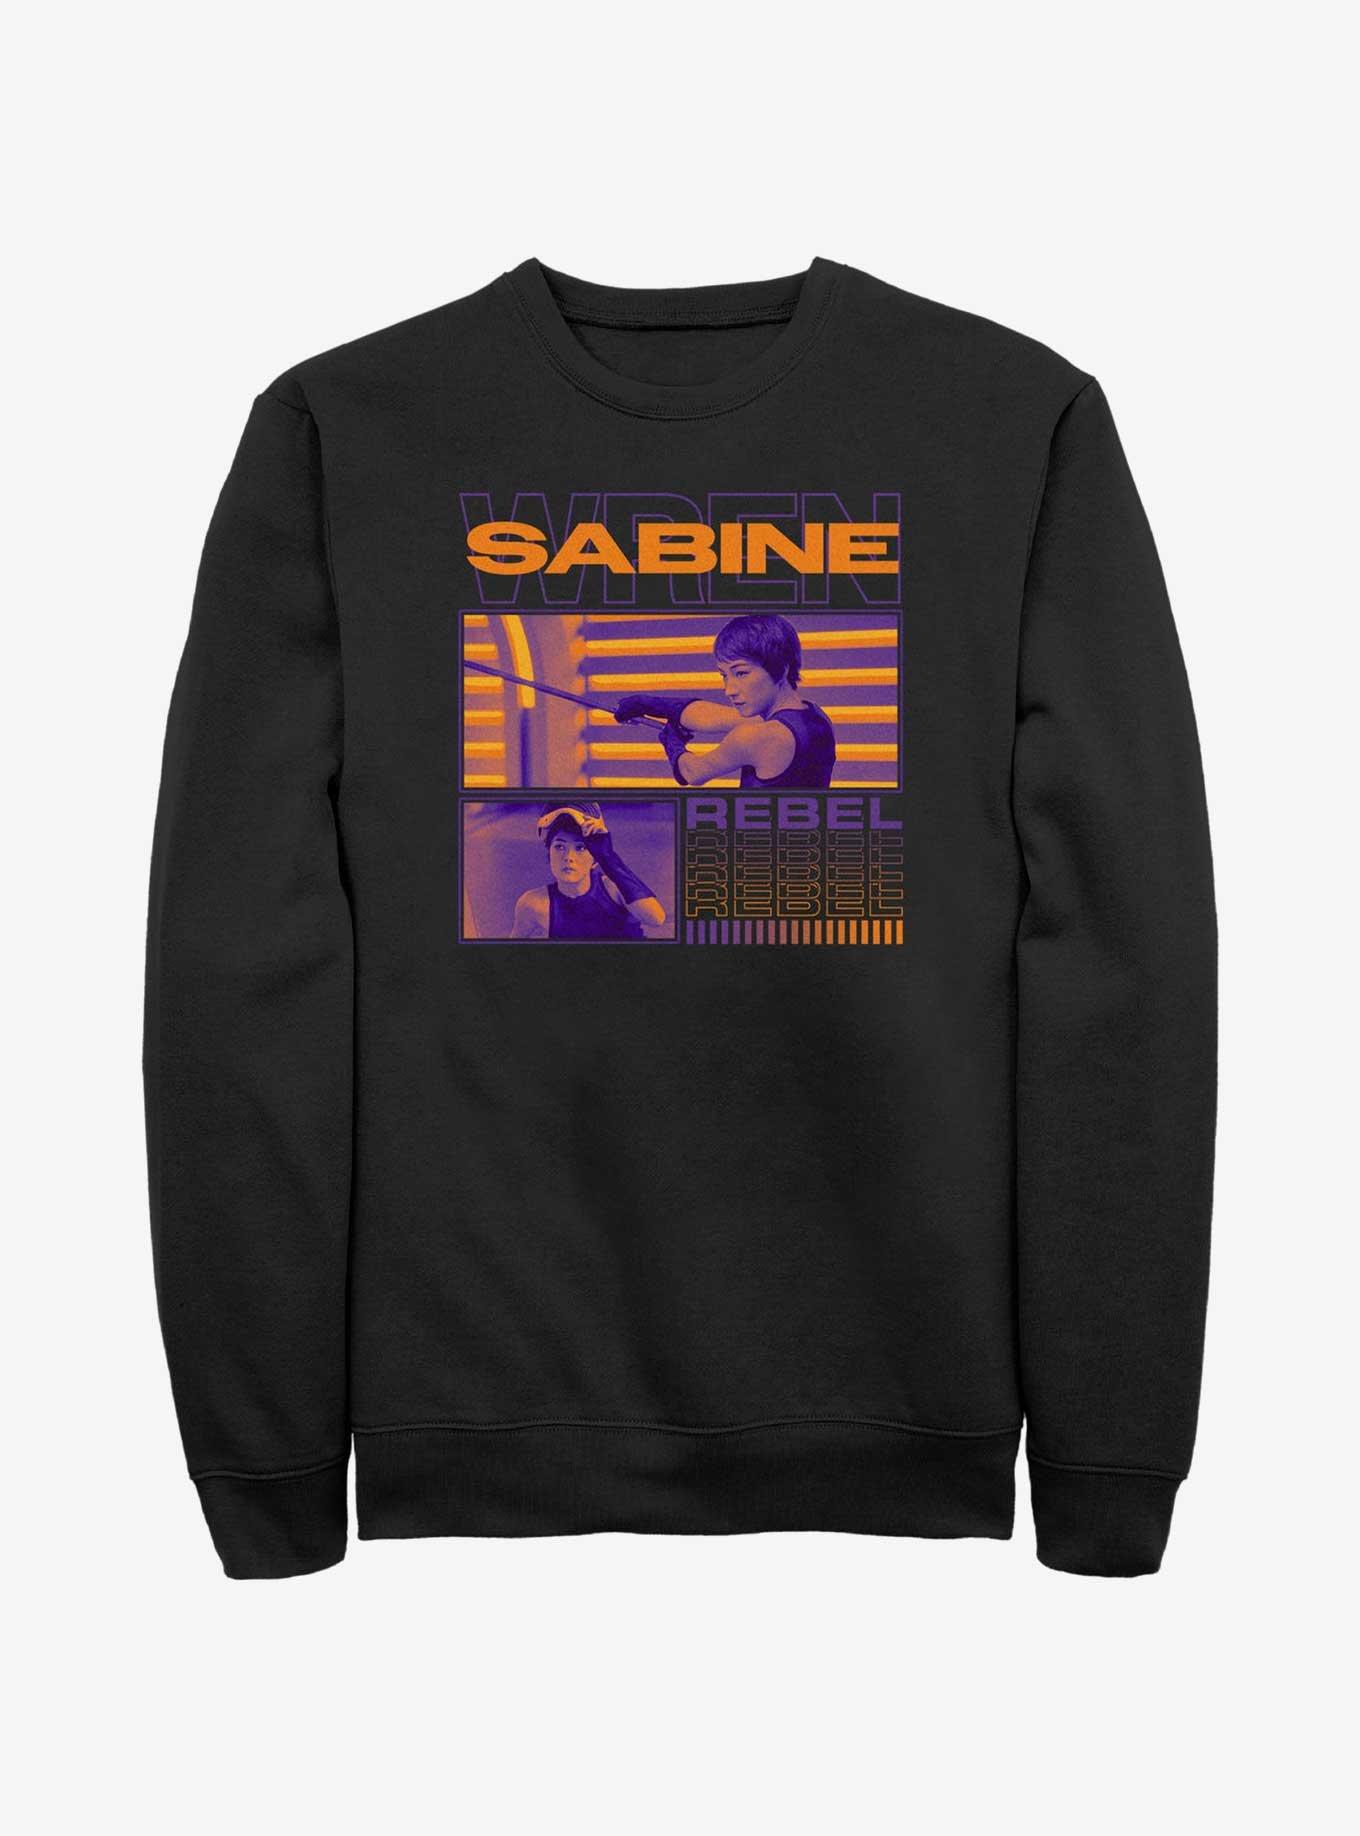 Star Wars Ahsoka Sabine Wren Rebel Sweatshirt